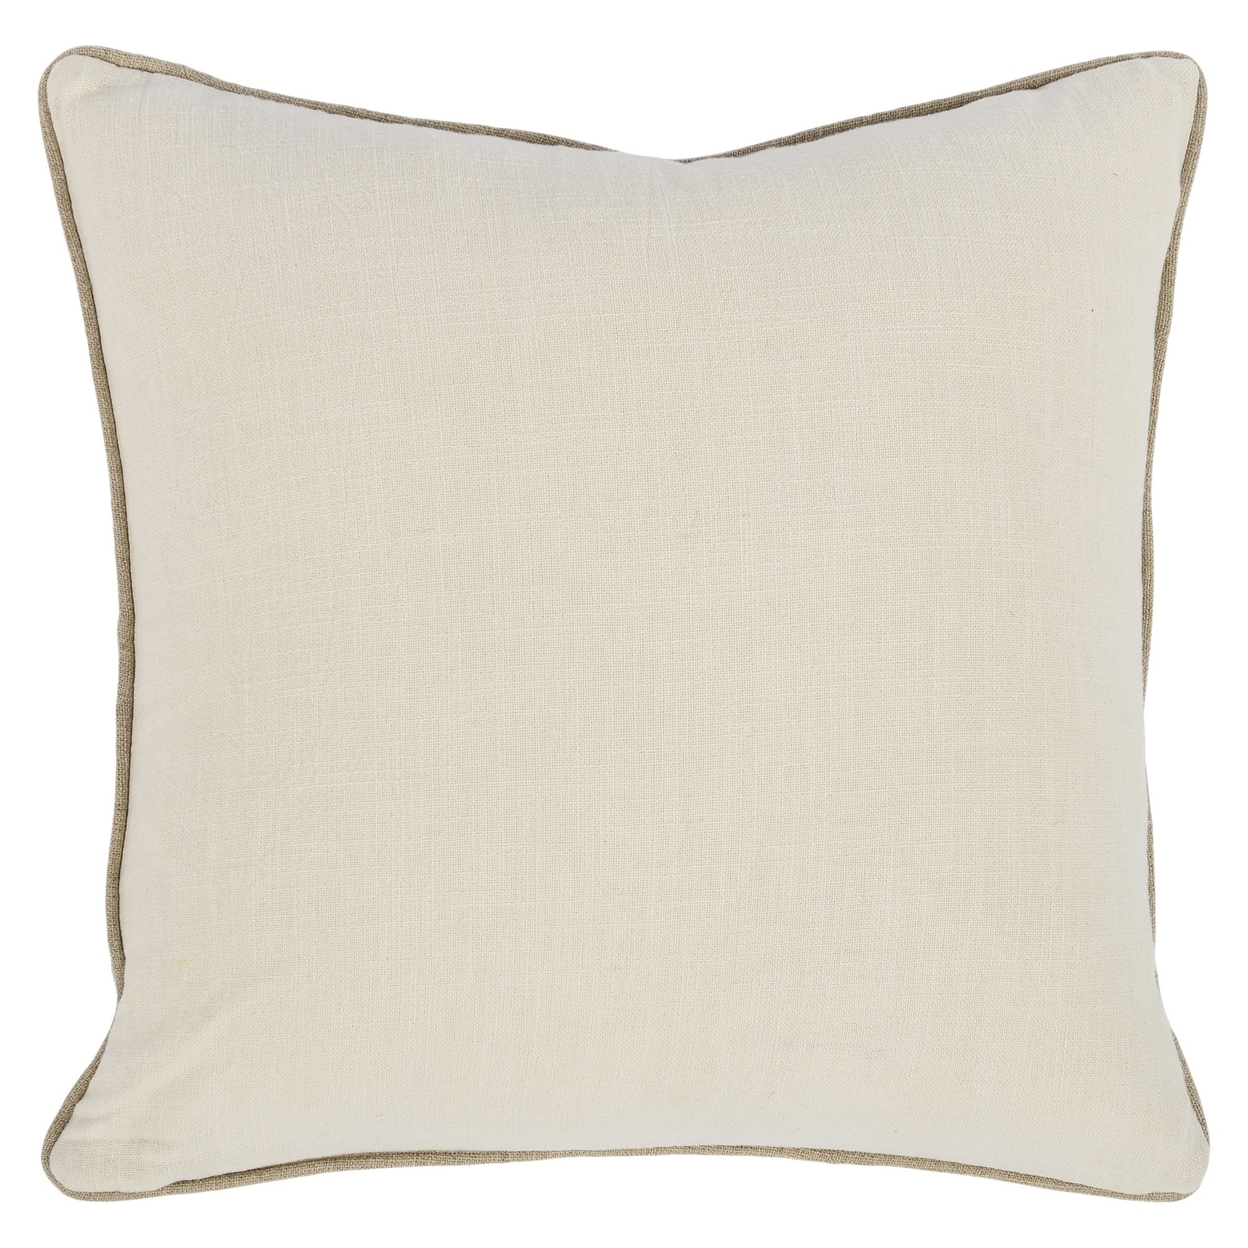 20 Inch Square Accent Throw Pillow, Chevron Watercolor Design, Ivory, Black- Saltoro Sherpi